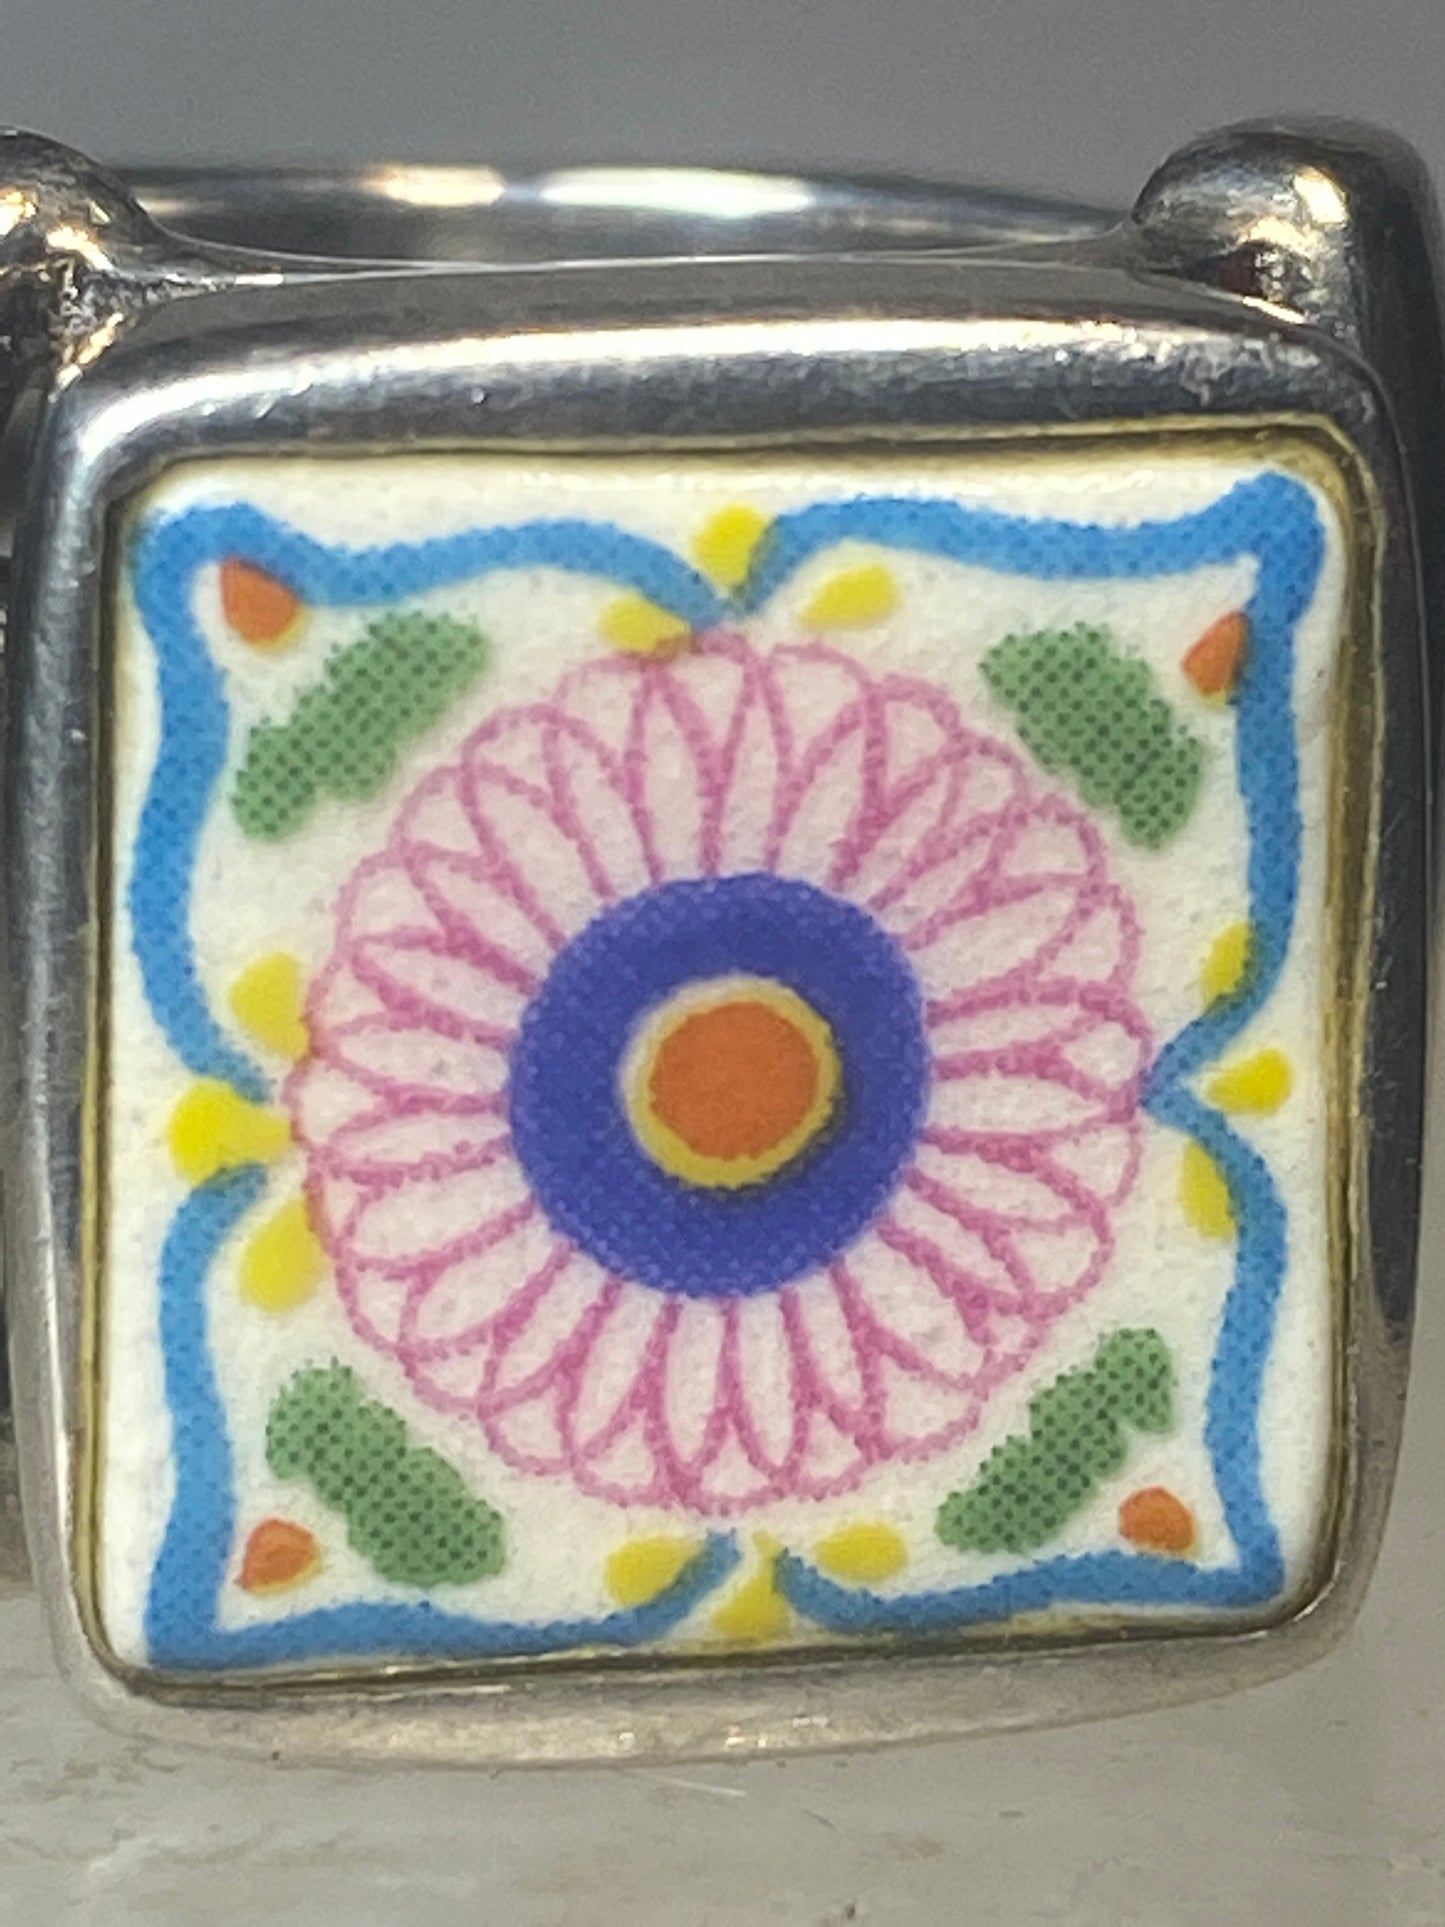 Porcelain ring flower tile size 5.50 sterling silver women